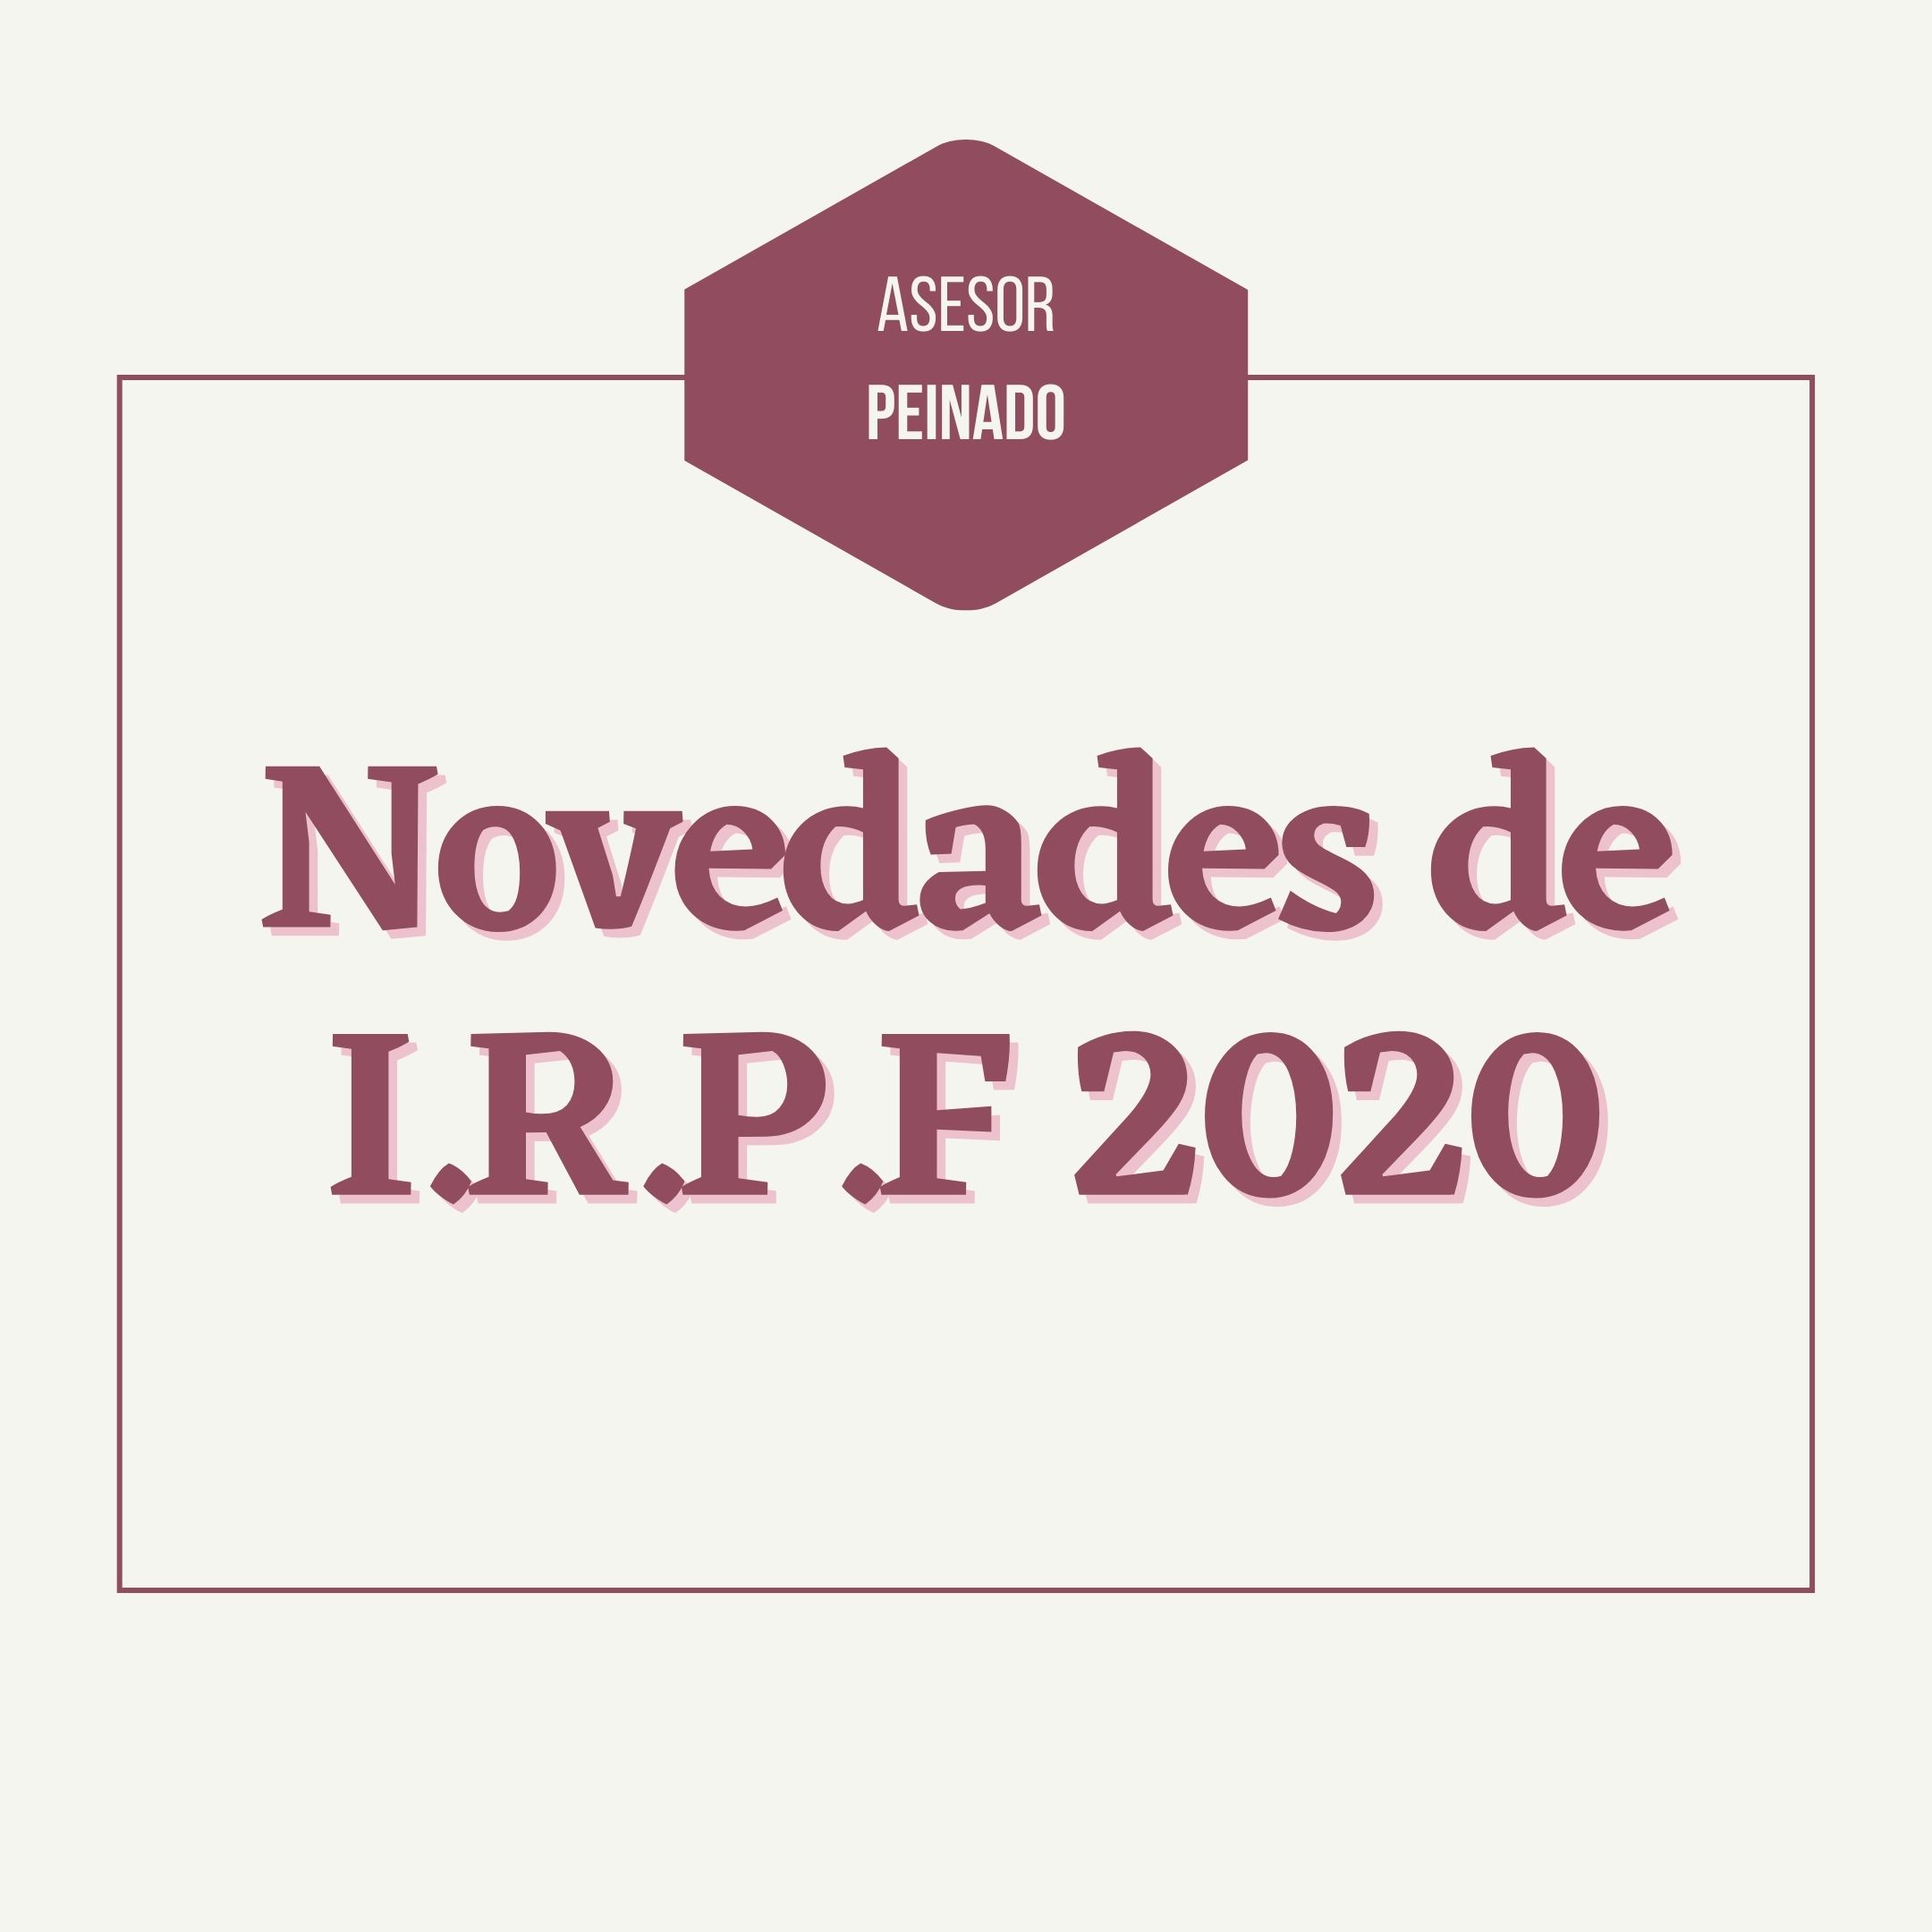 Novedades IRPF 2020